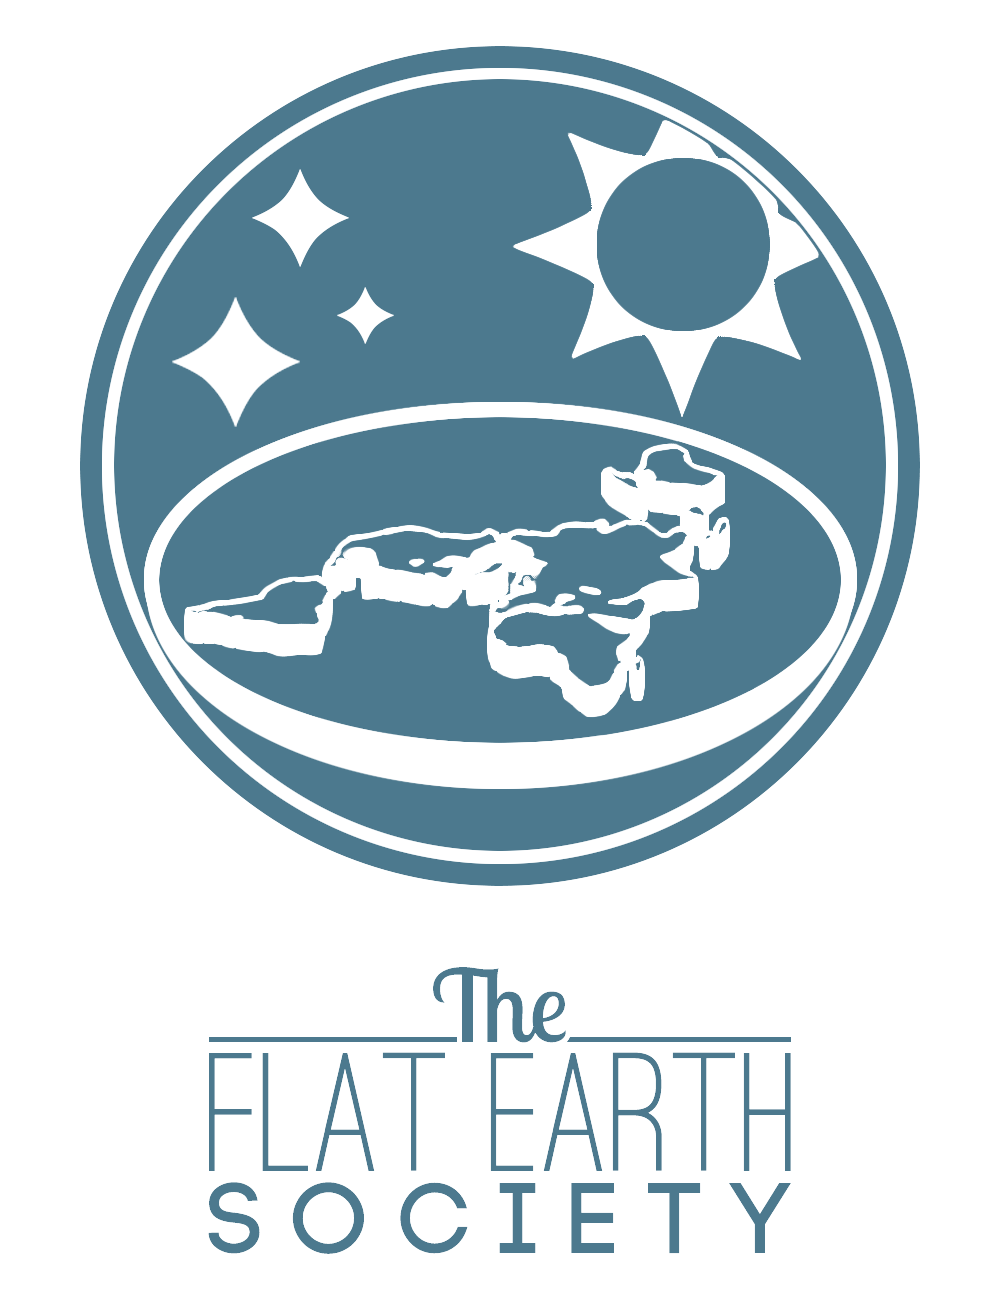 Earth Logo - Flat Earth Society Logo.png